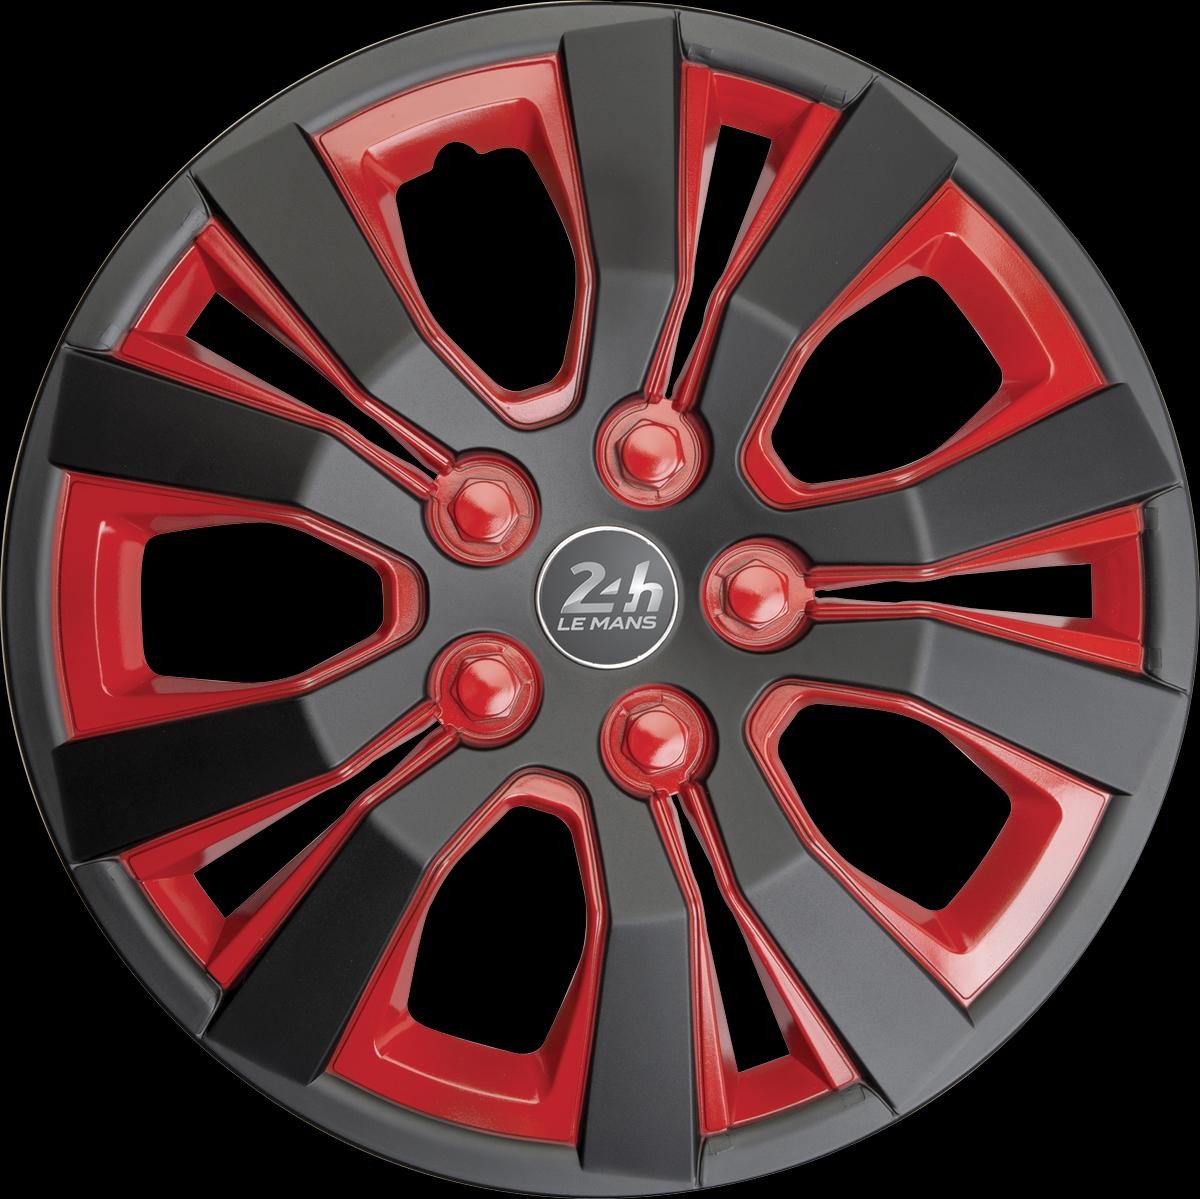 Wheel covers Red 24H LE MANS Mulsanne E16MULBR